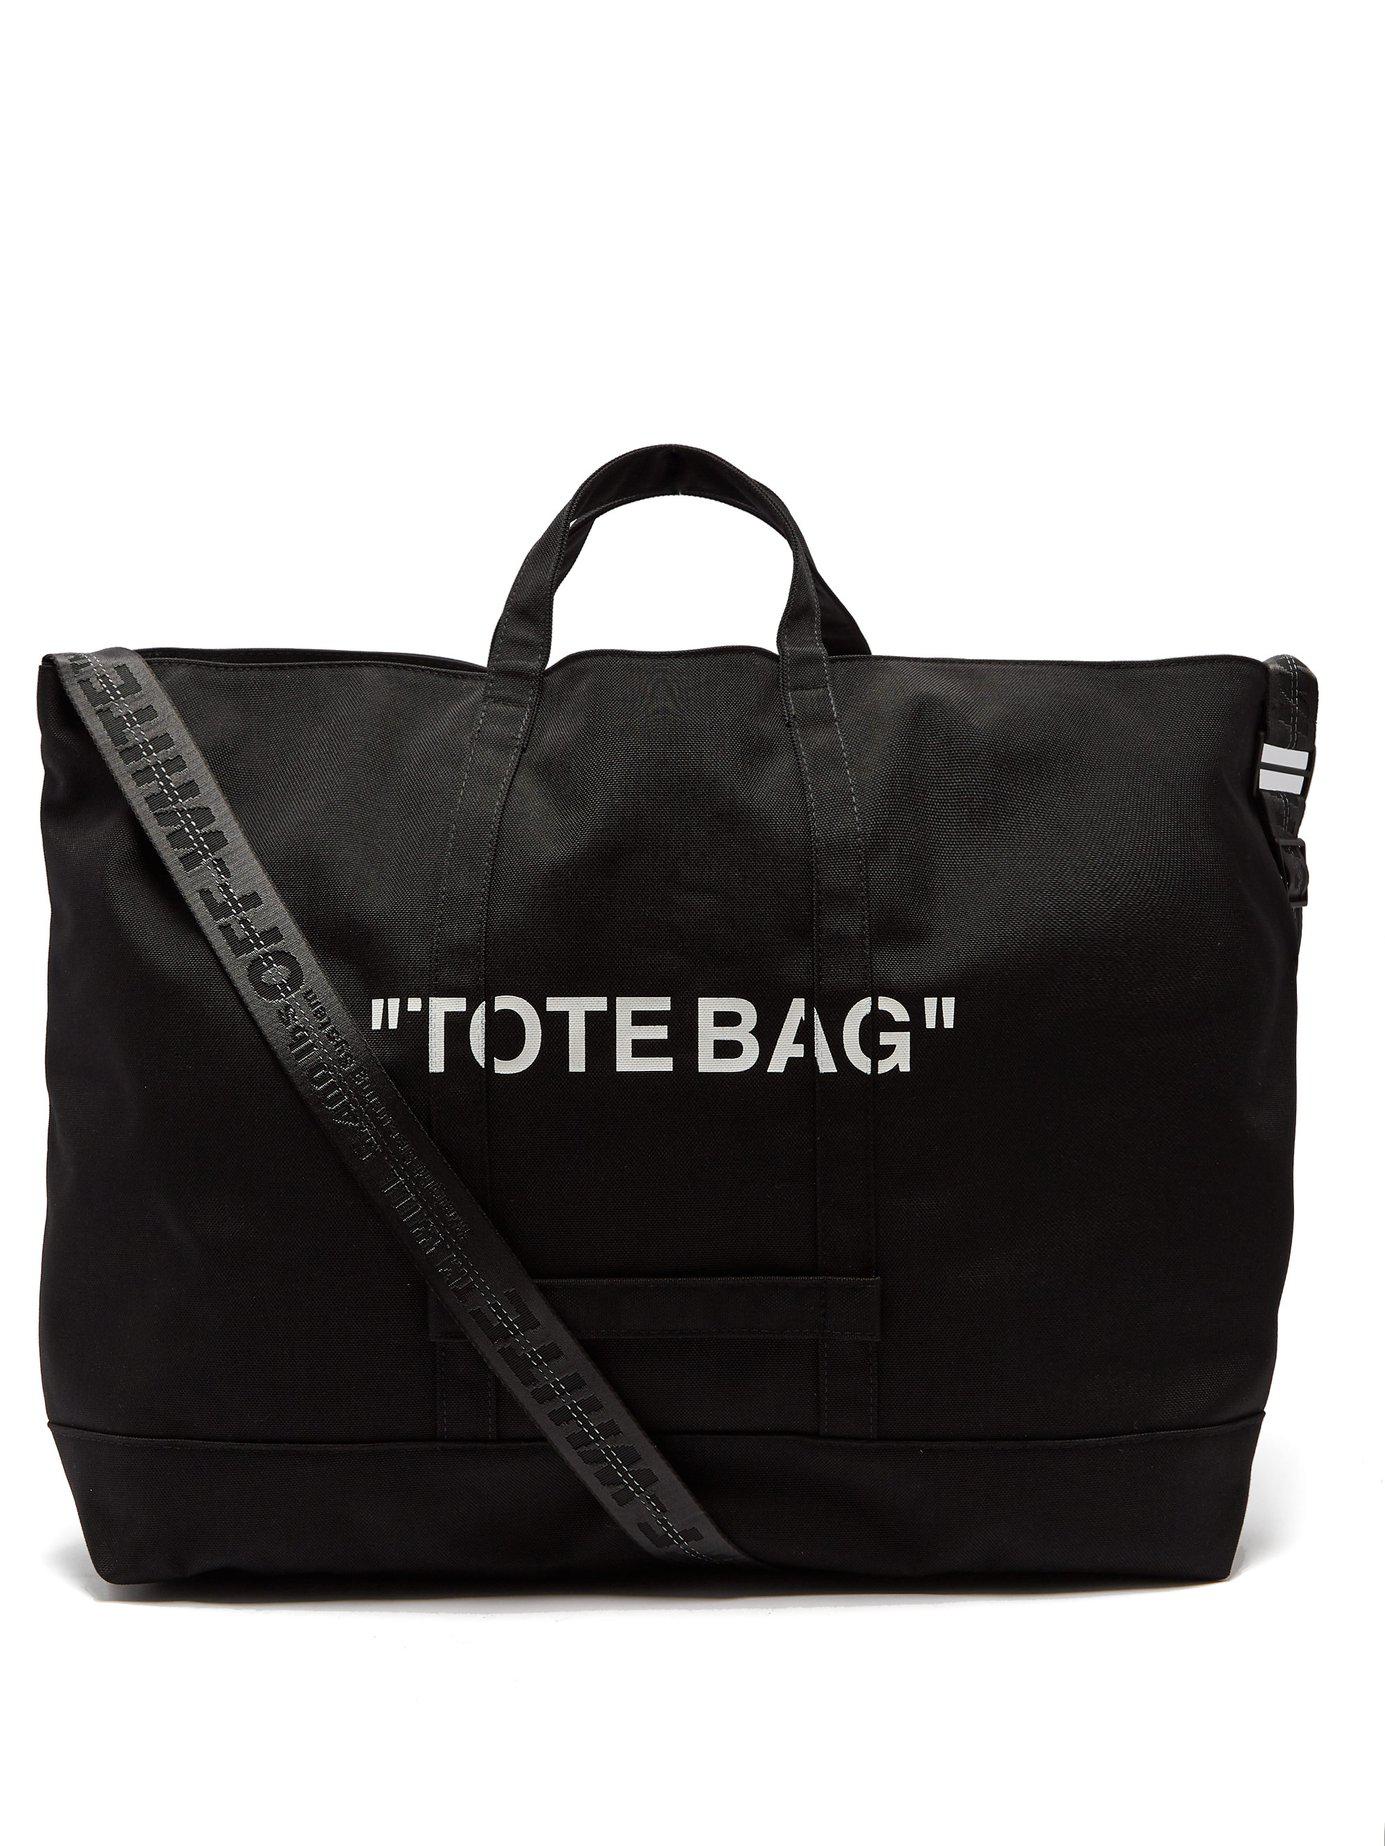 OFF-WHITE Quote Tote Bag GOODS Black White